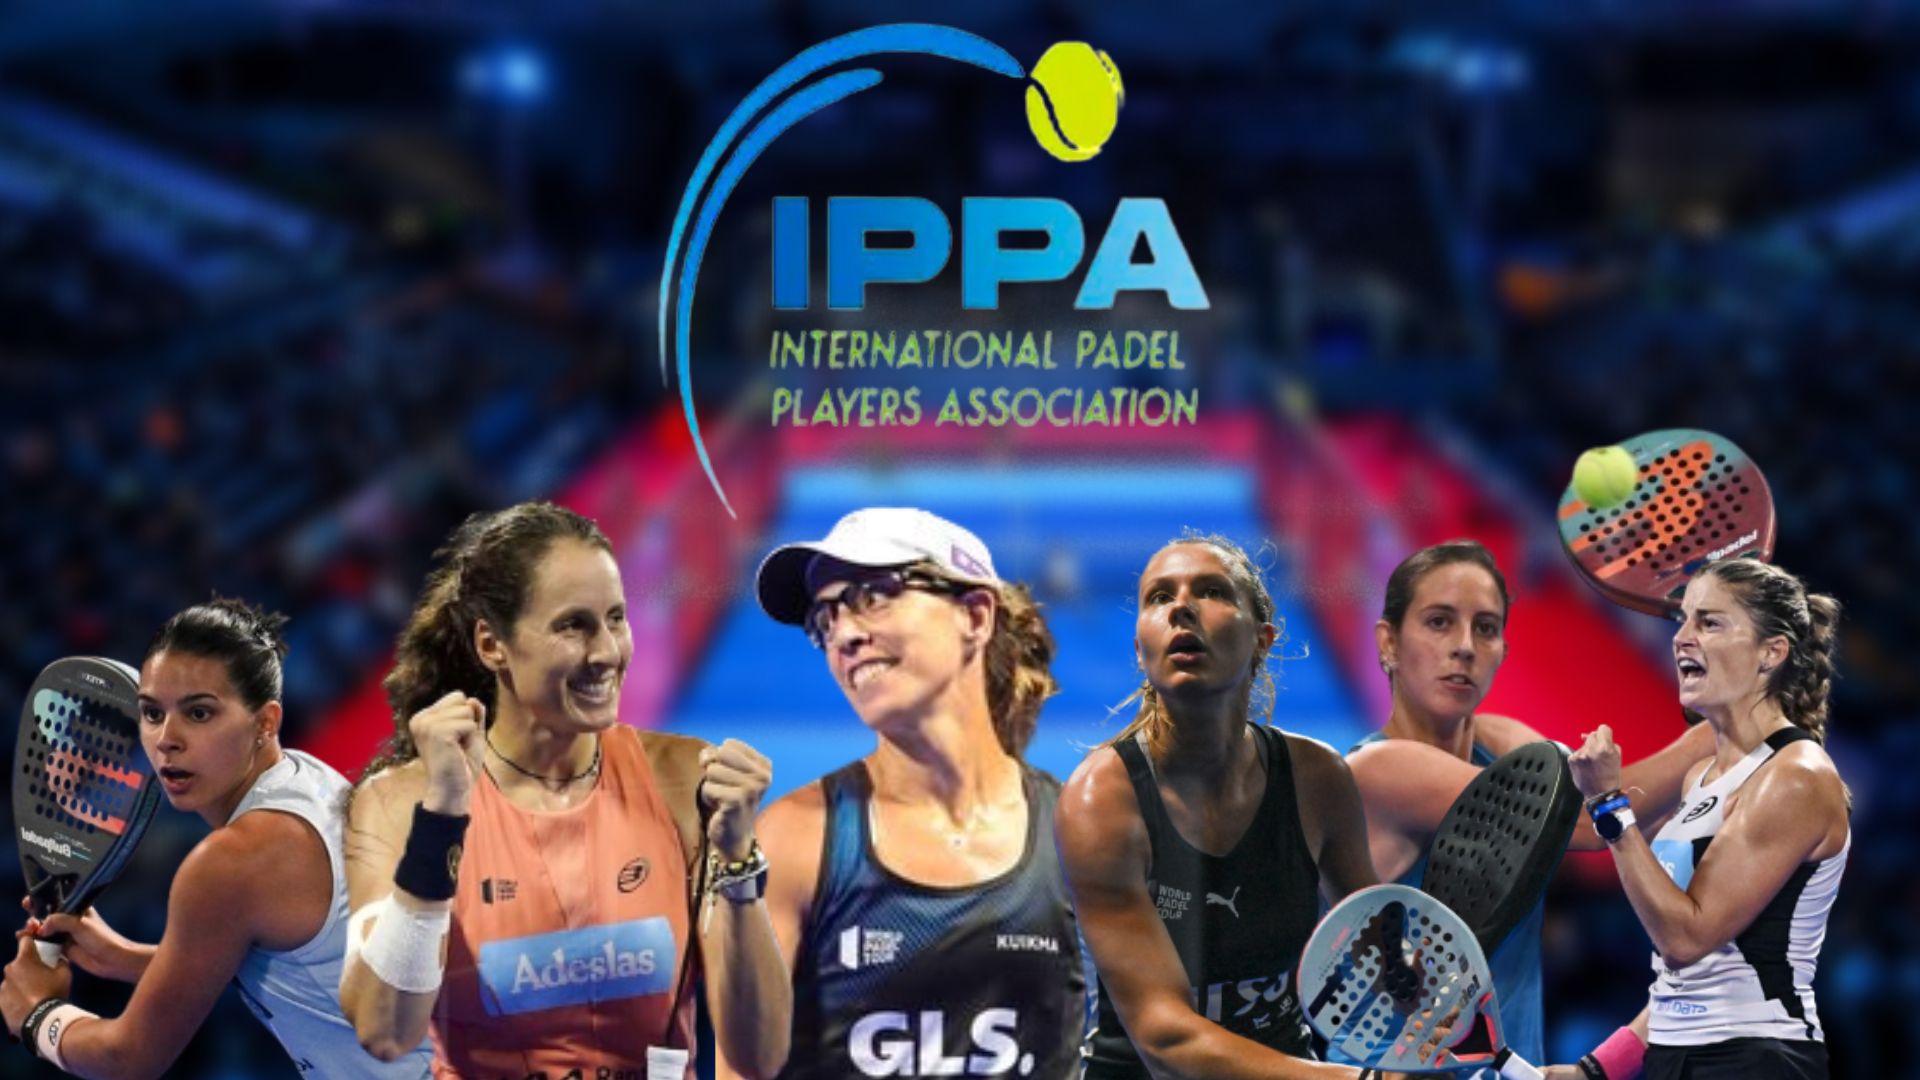 IPPA International Padel Girl Players Association